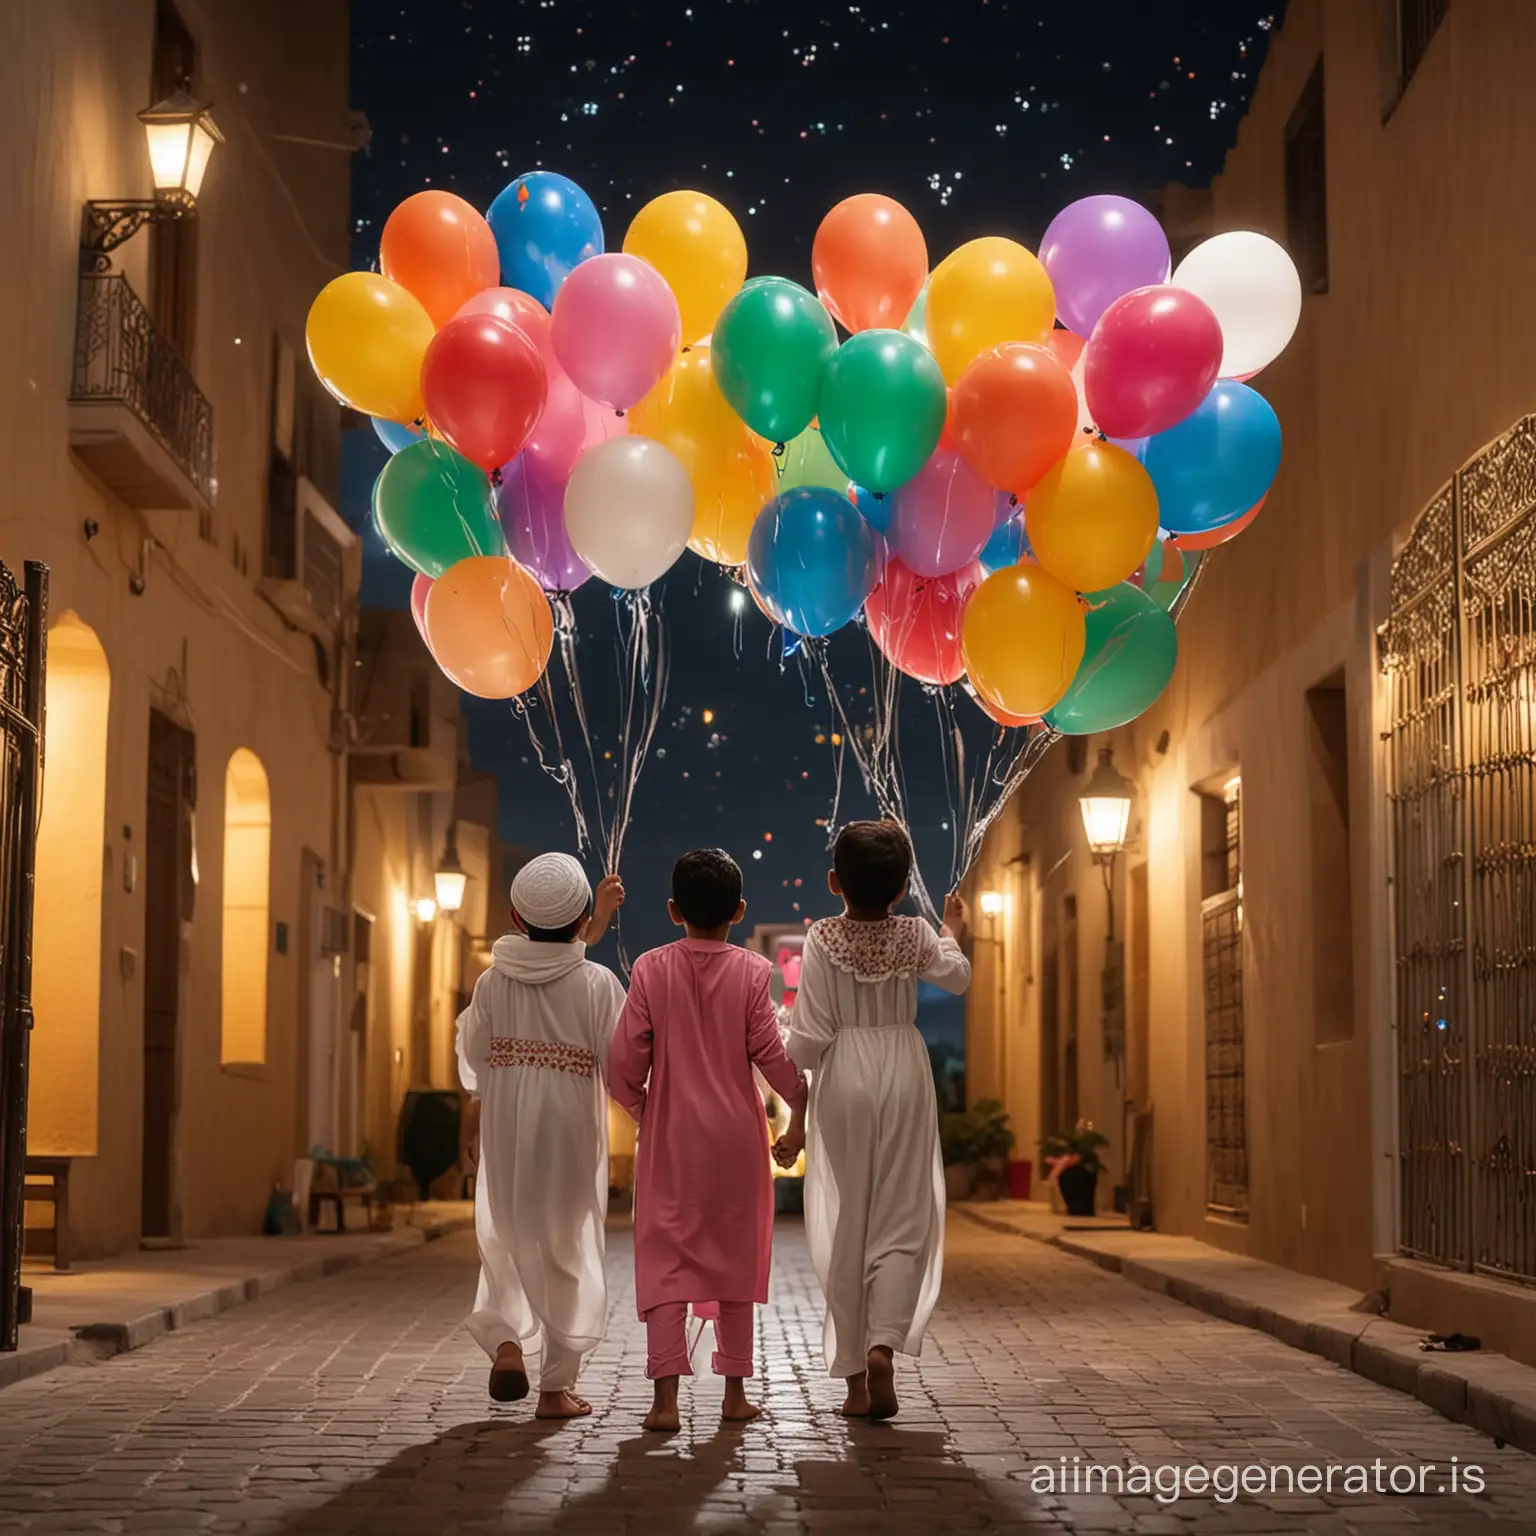 Joyful-Arab-Children-Celebrating-Eid-ul-Fitr-with-Balloons-and-Candy-at-Night